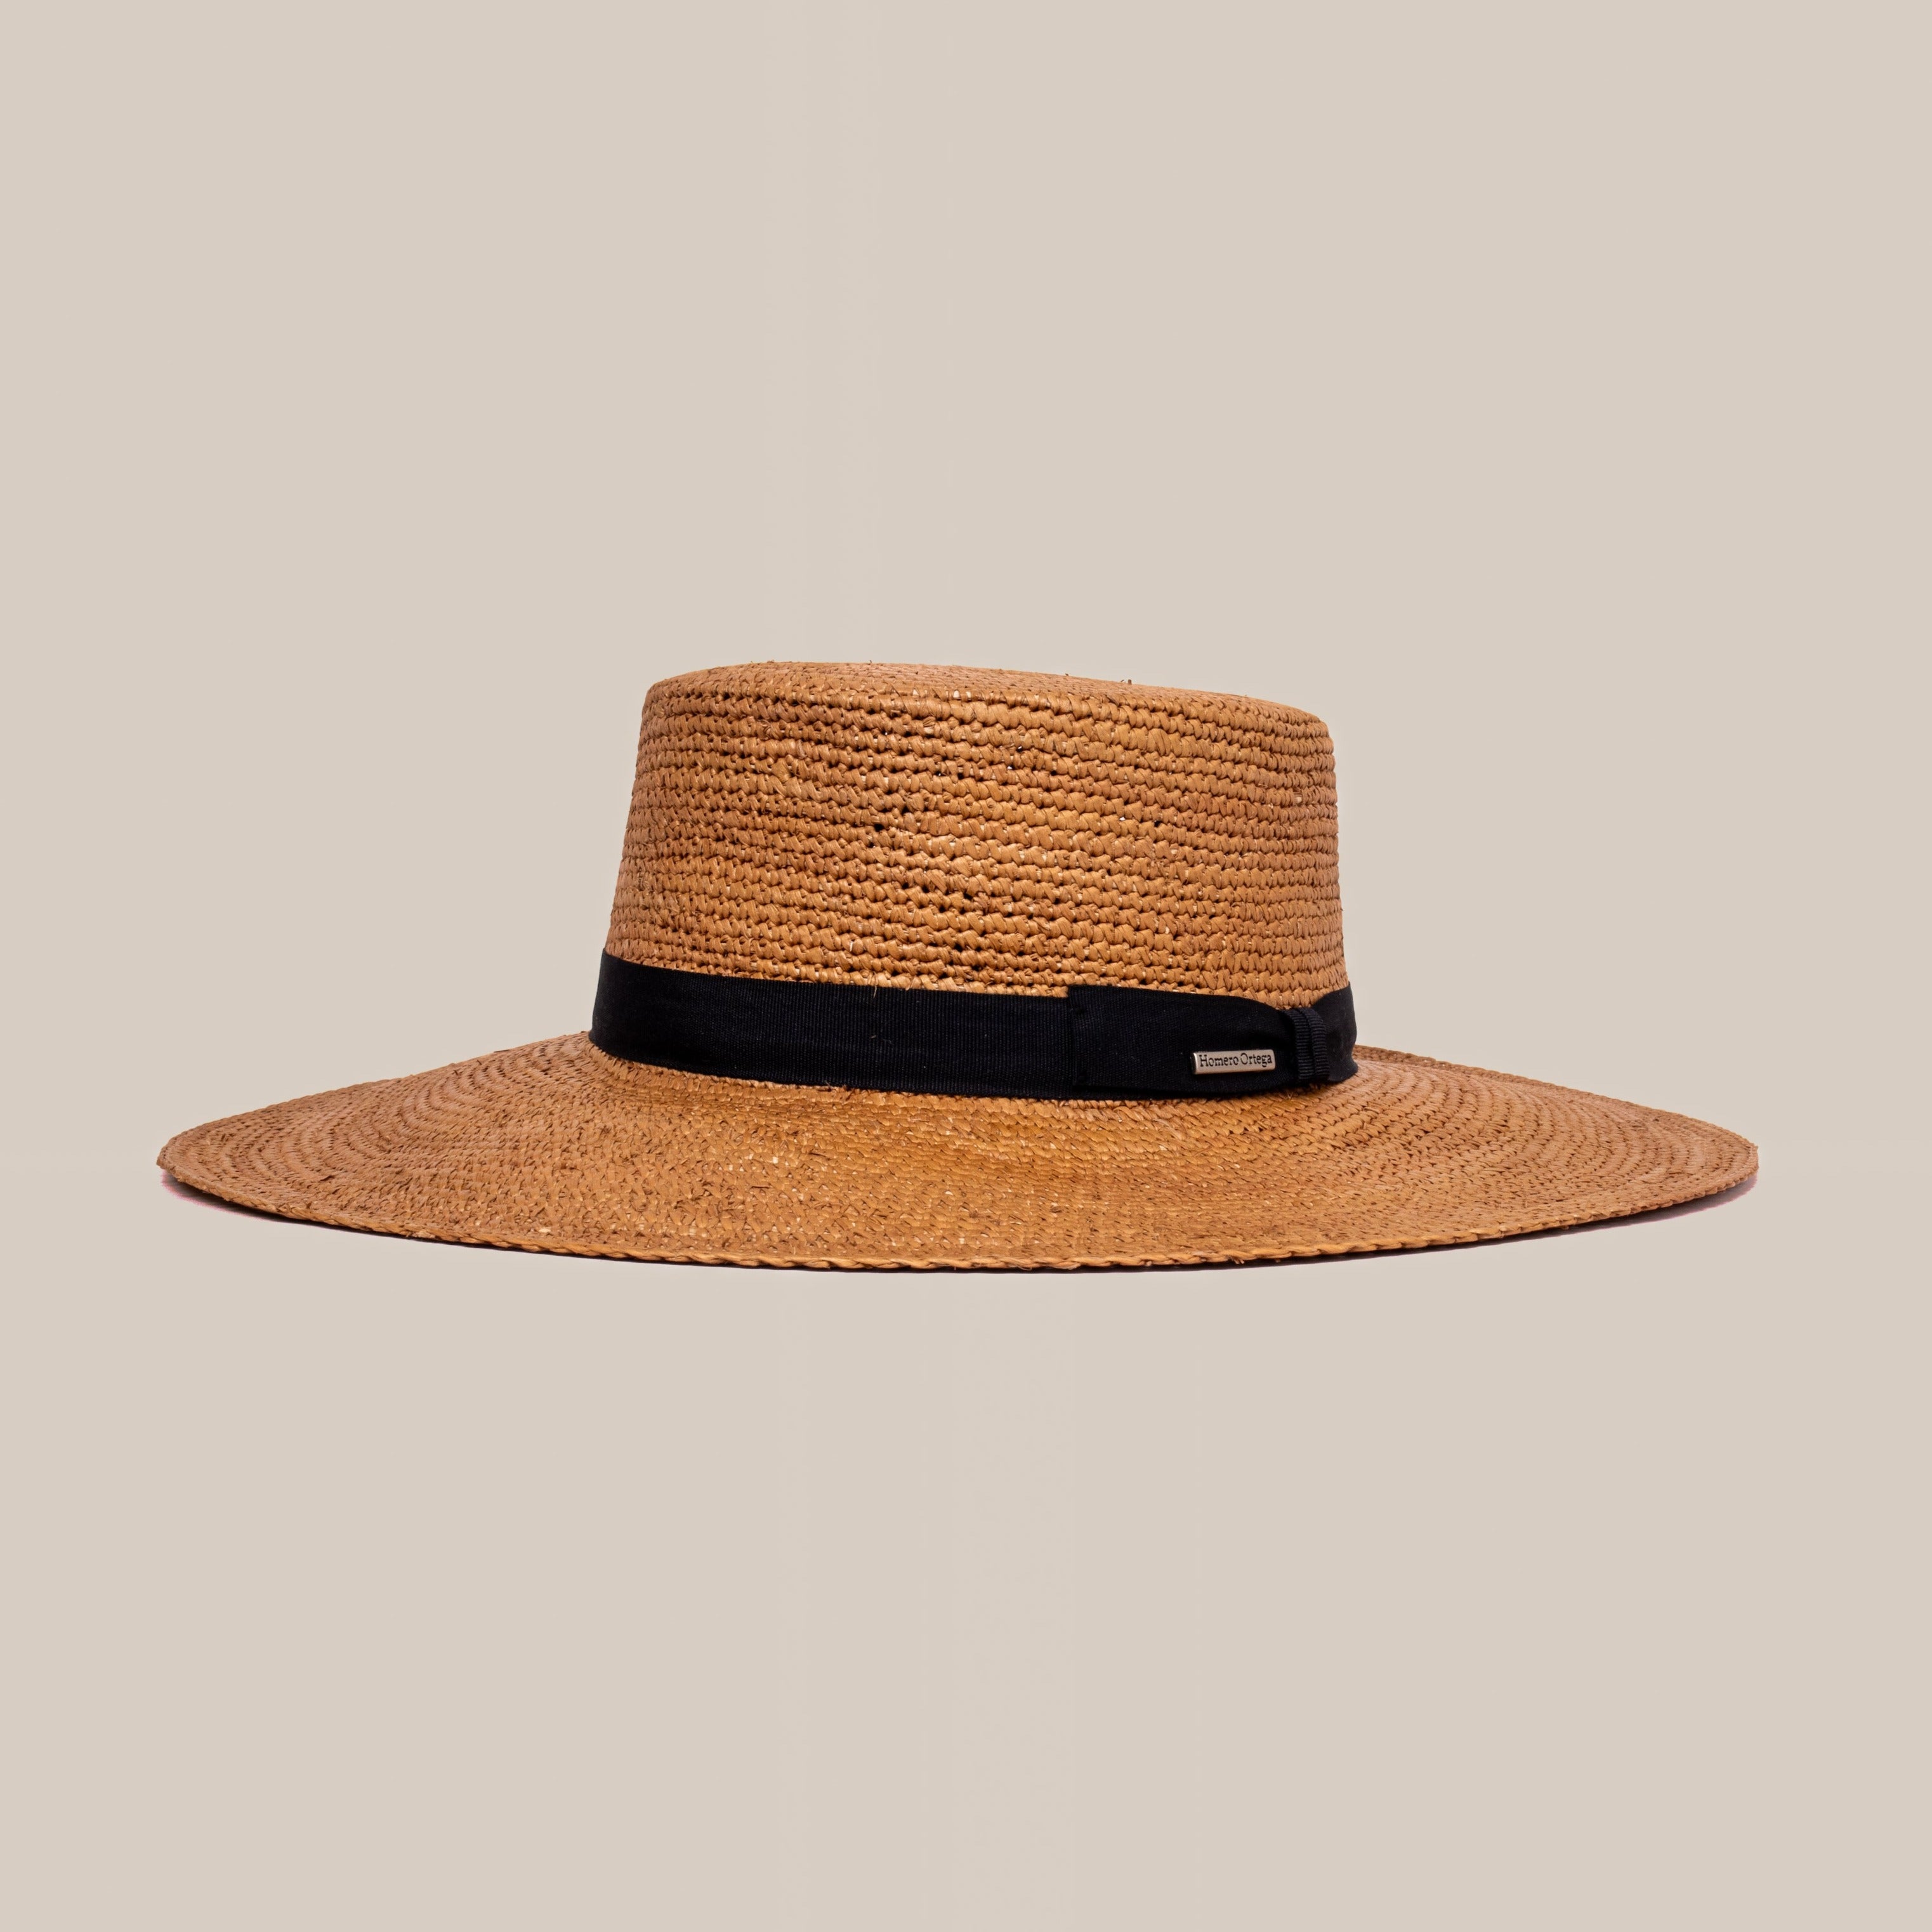 woven summer hat for sale in australia